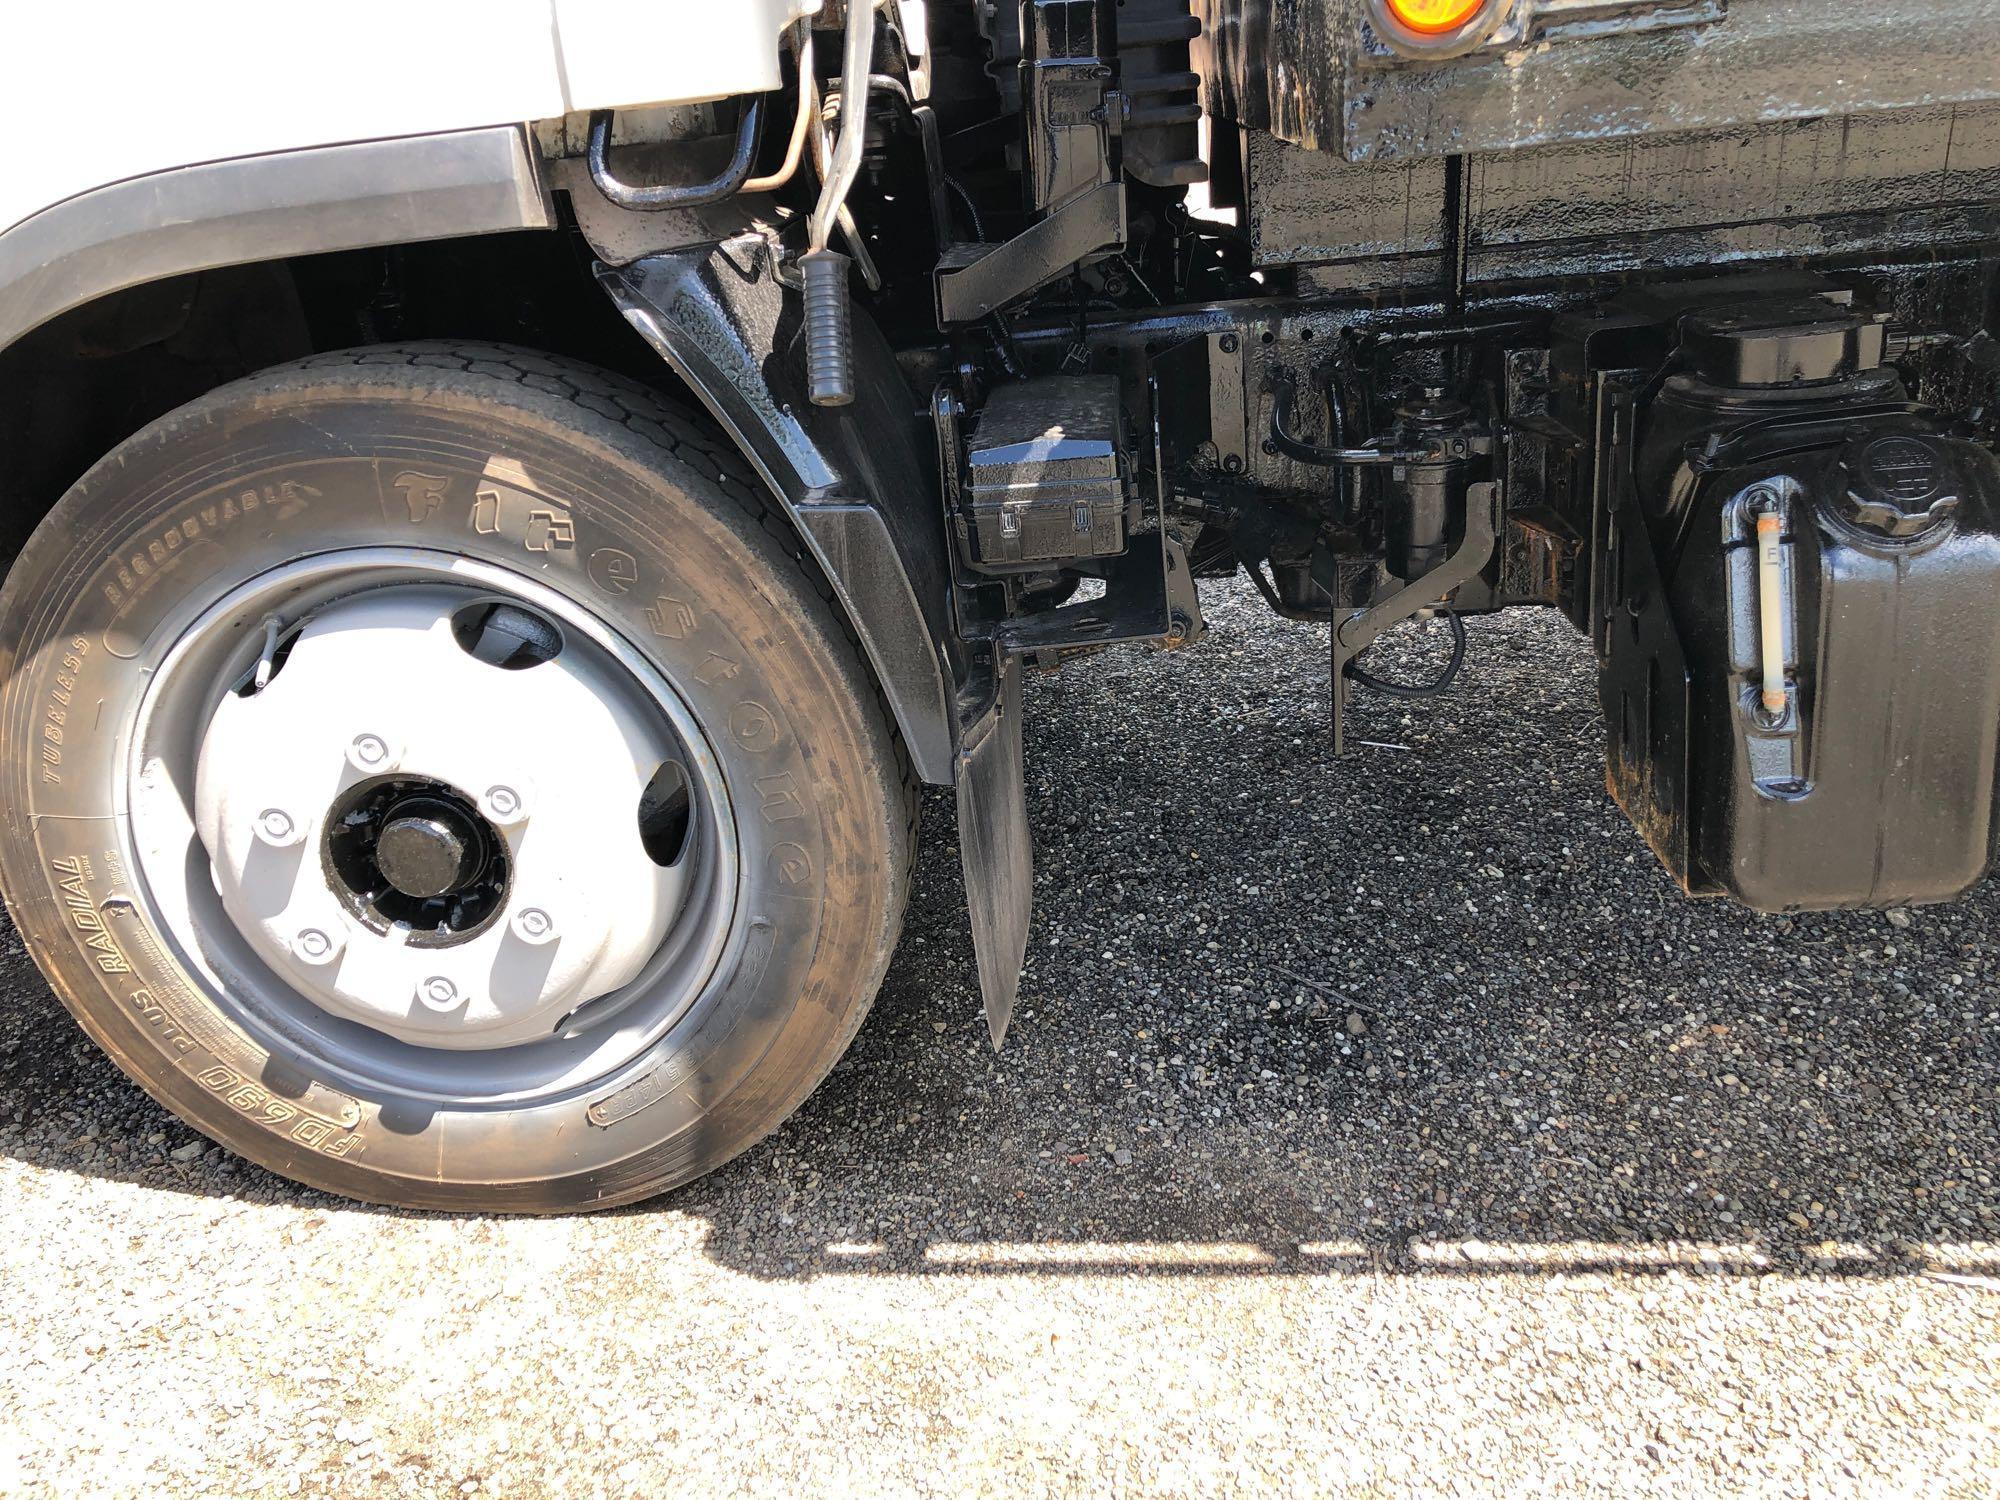 2014 Isuzu cab over diesel flatbed truck with 42,886 miles